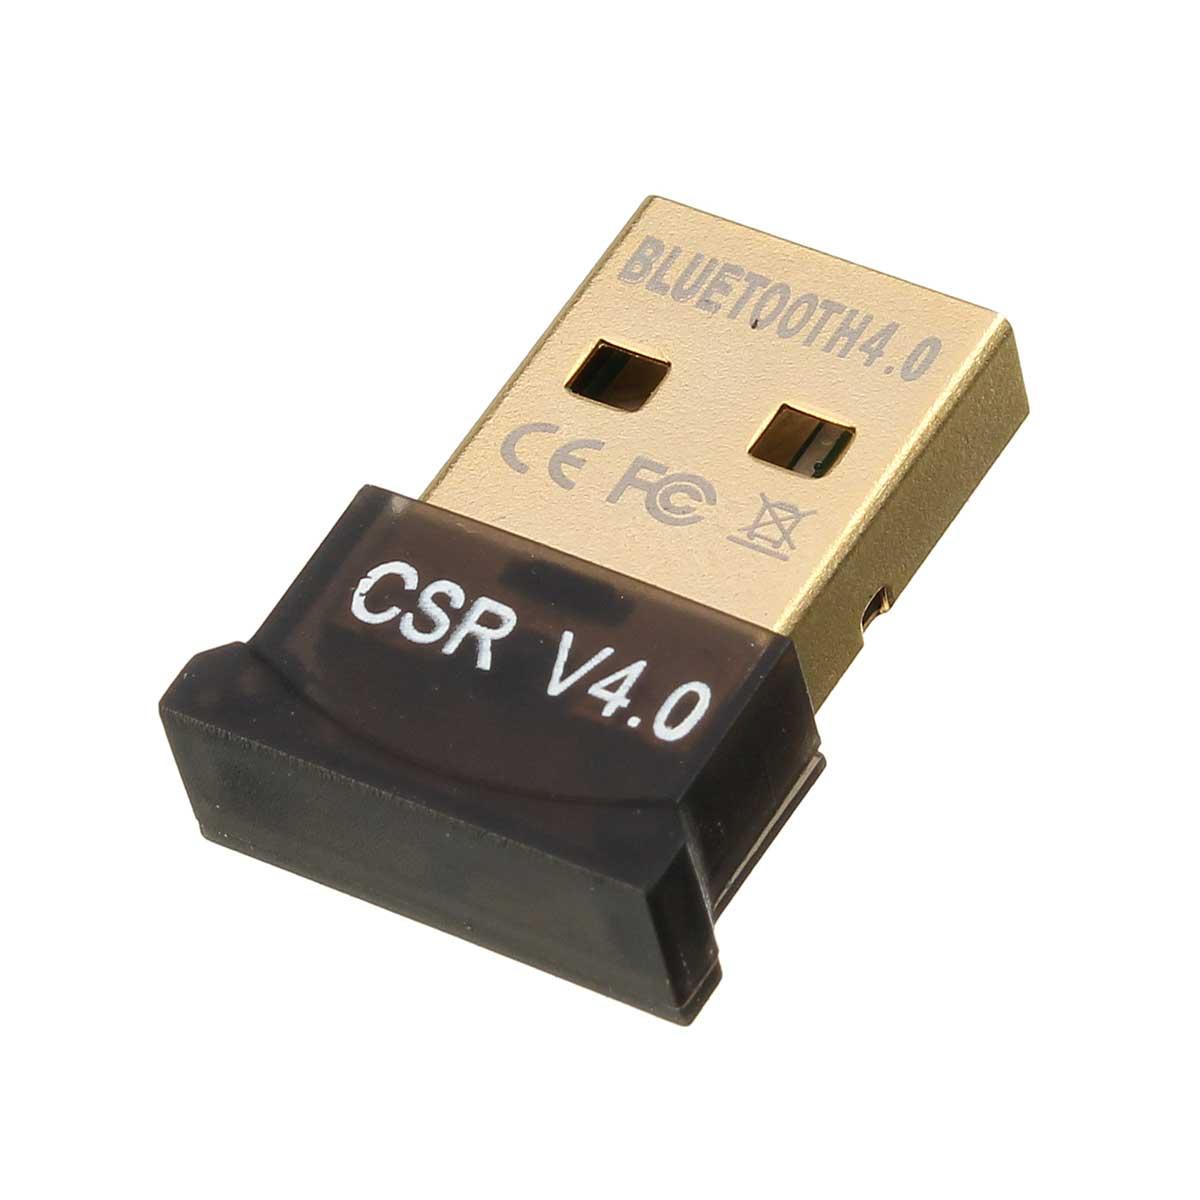 BLUETOOTH ADAPTER USB CSR V4.0  بدون تعريف, Cable